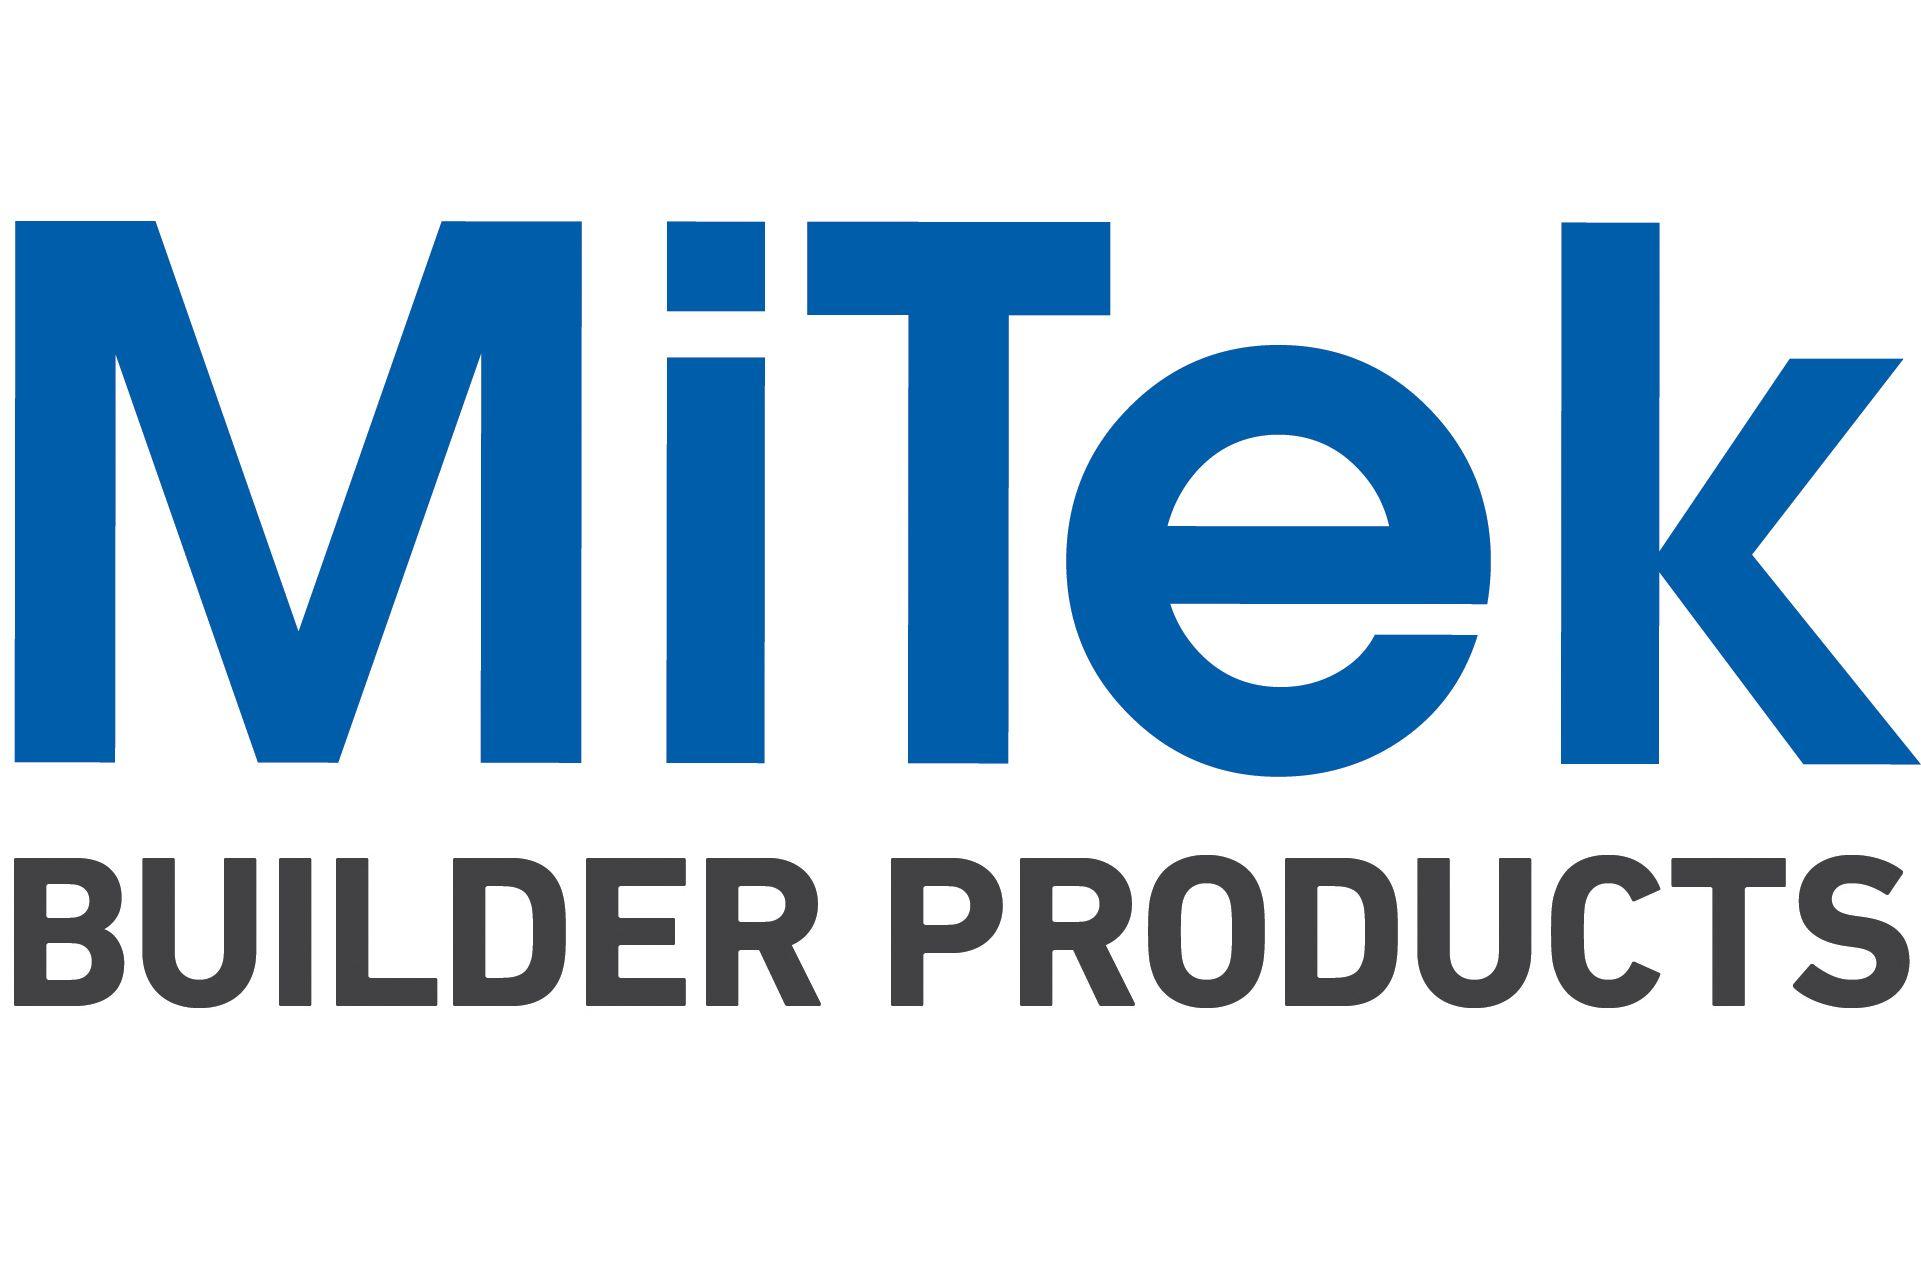 Mitek Logo - MiTek Introduces Builder Products Division | Remodeling | Products ...